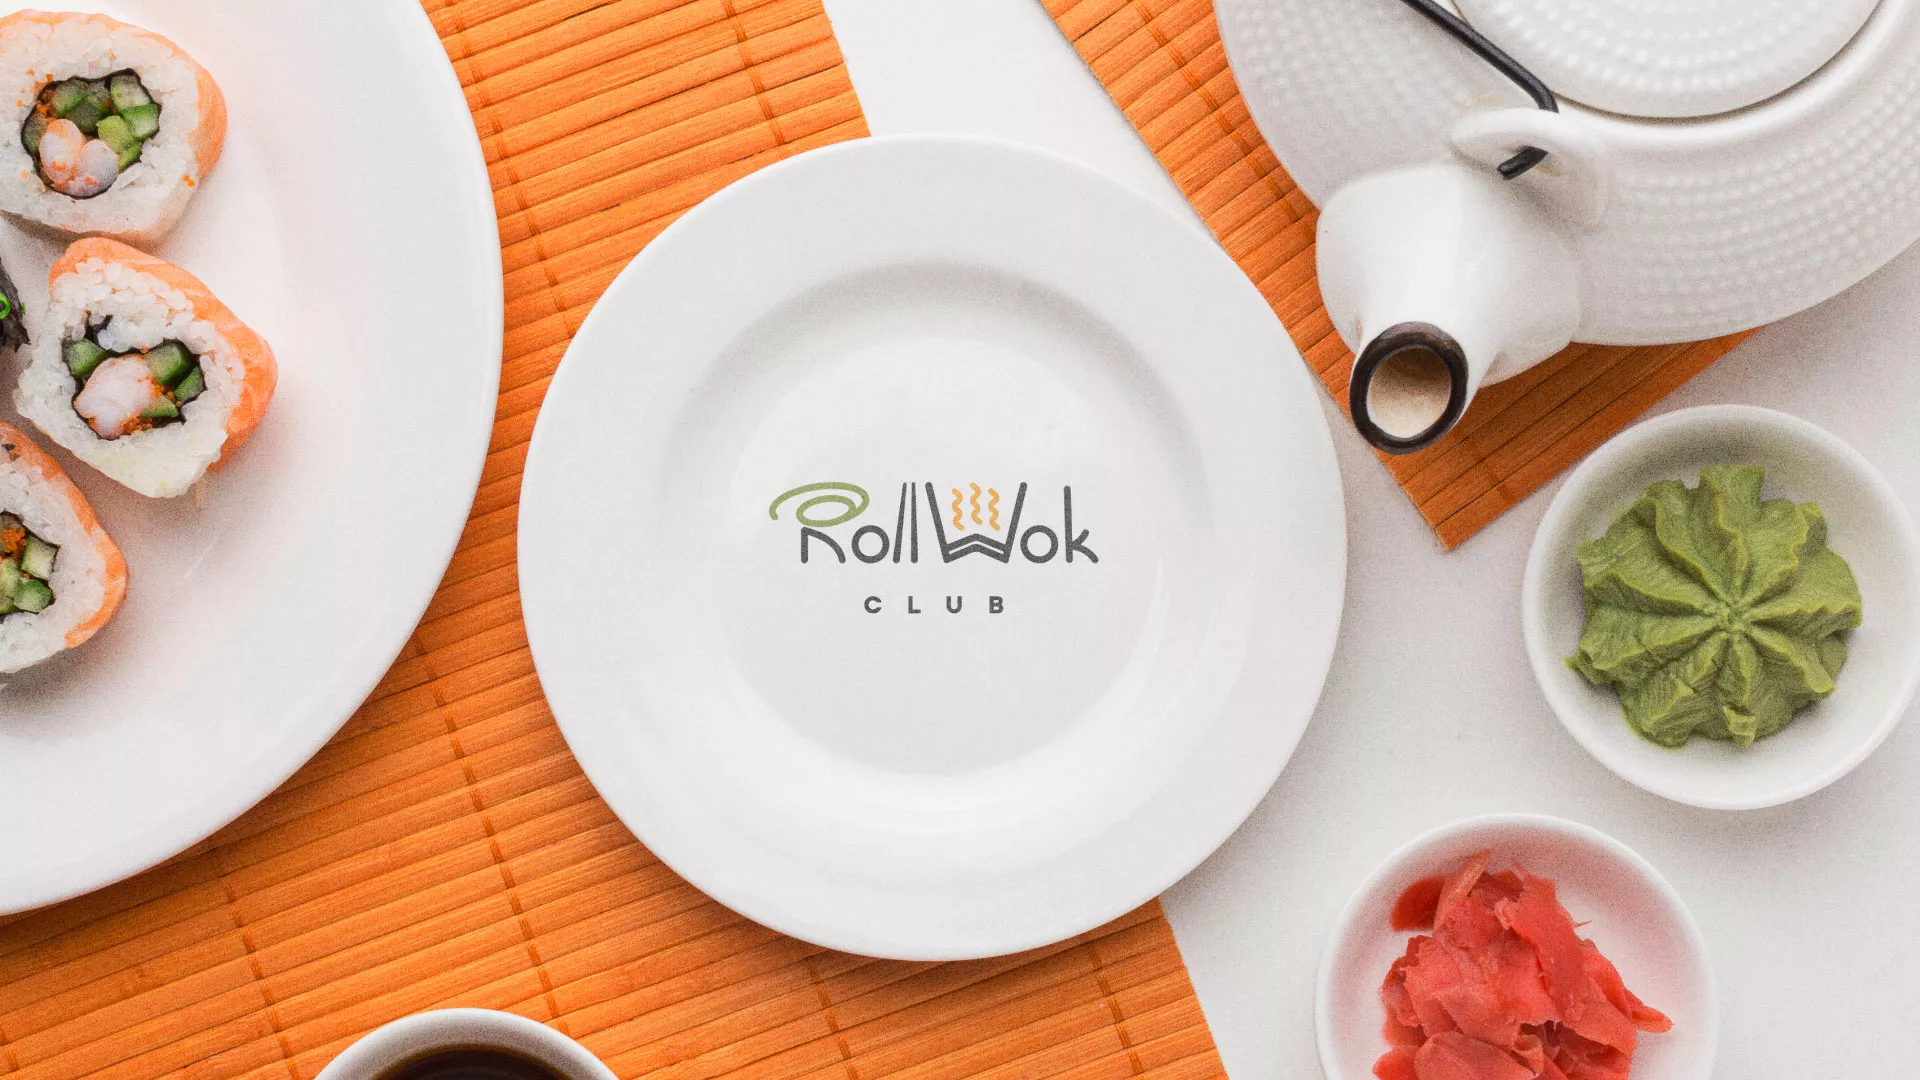 Разработка логотипа и фирменного стиля суши-бара «Roll Wok Club» в Гаджиево